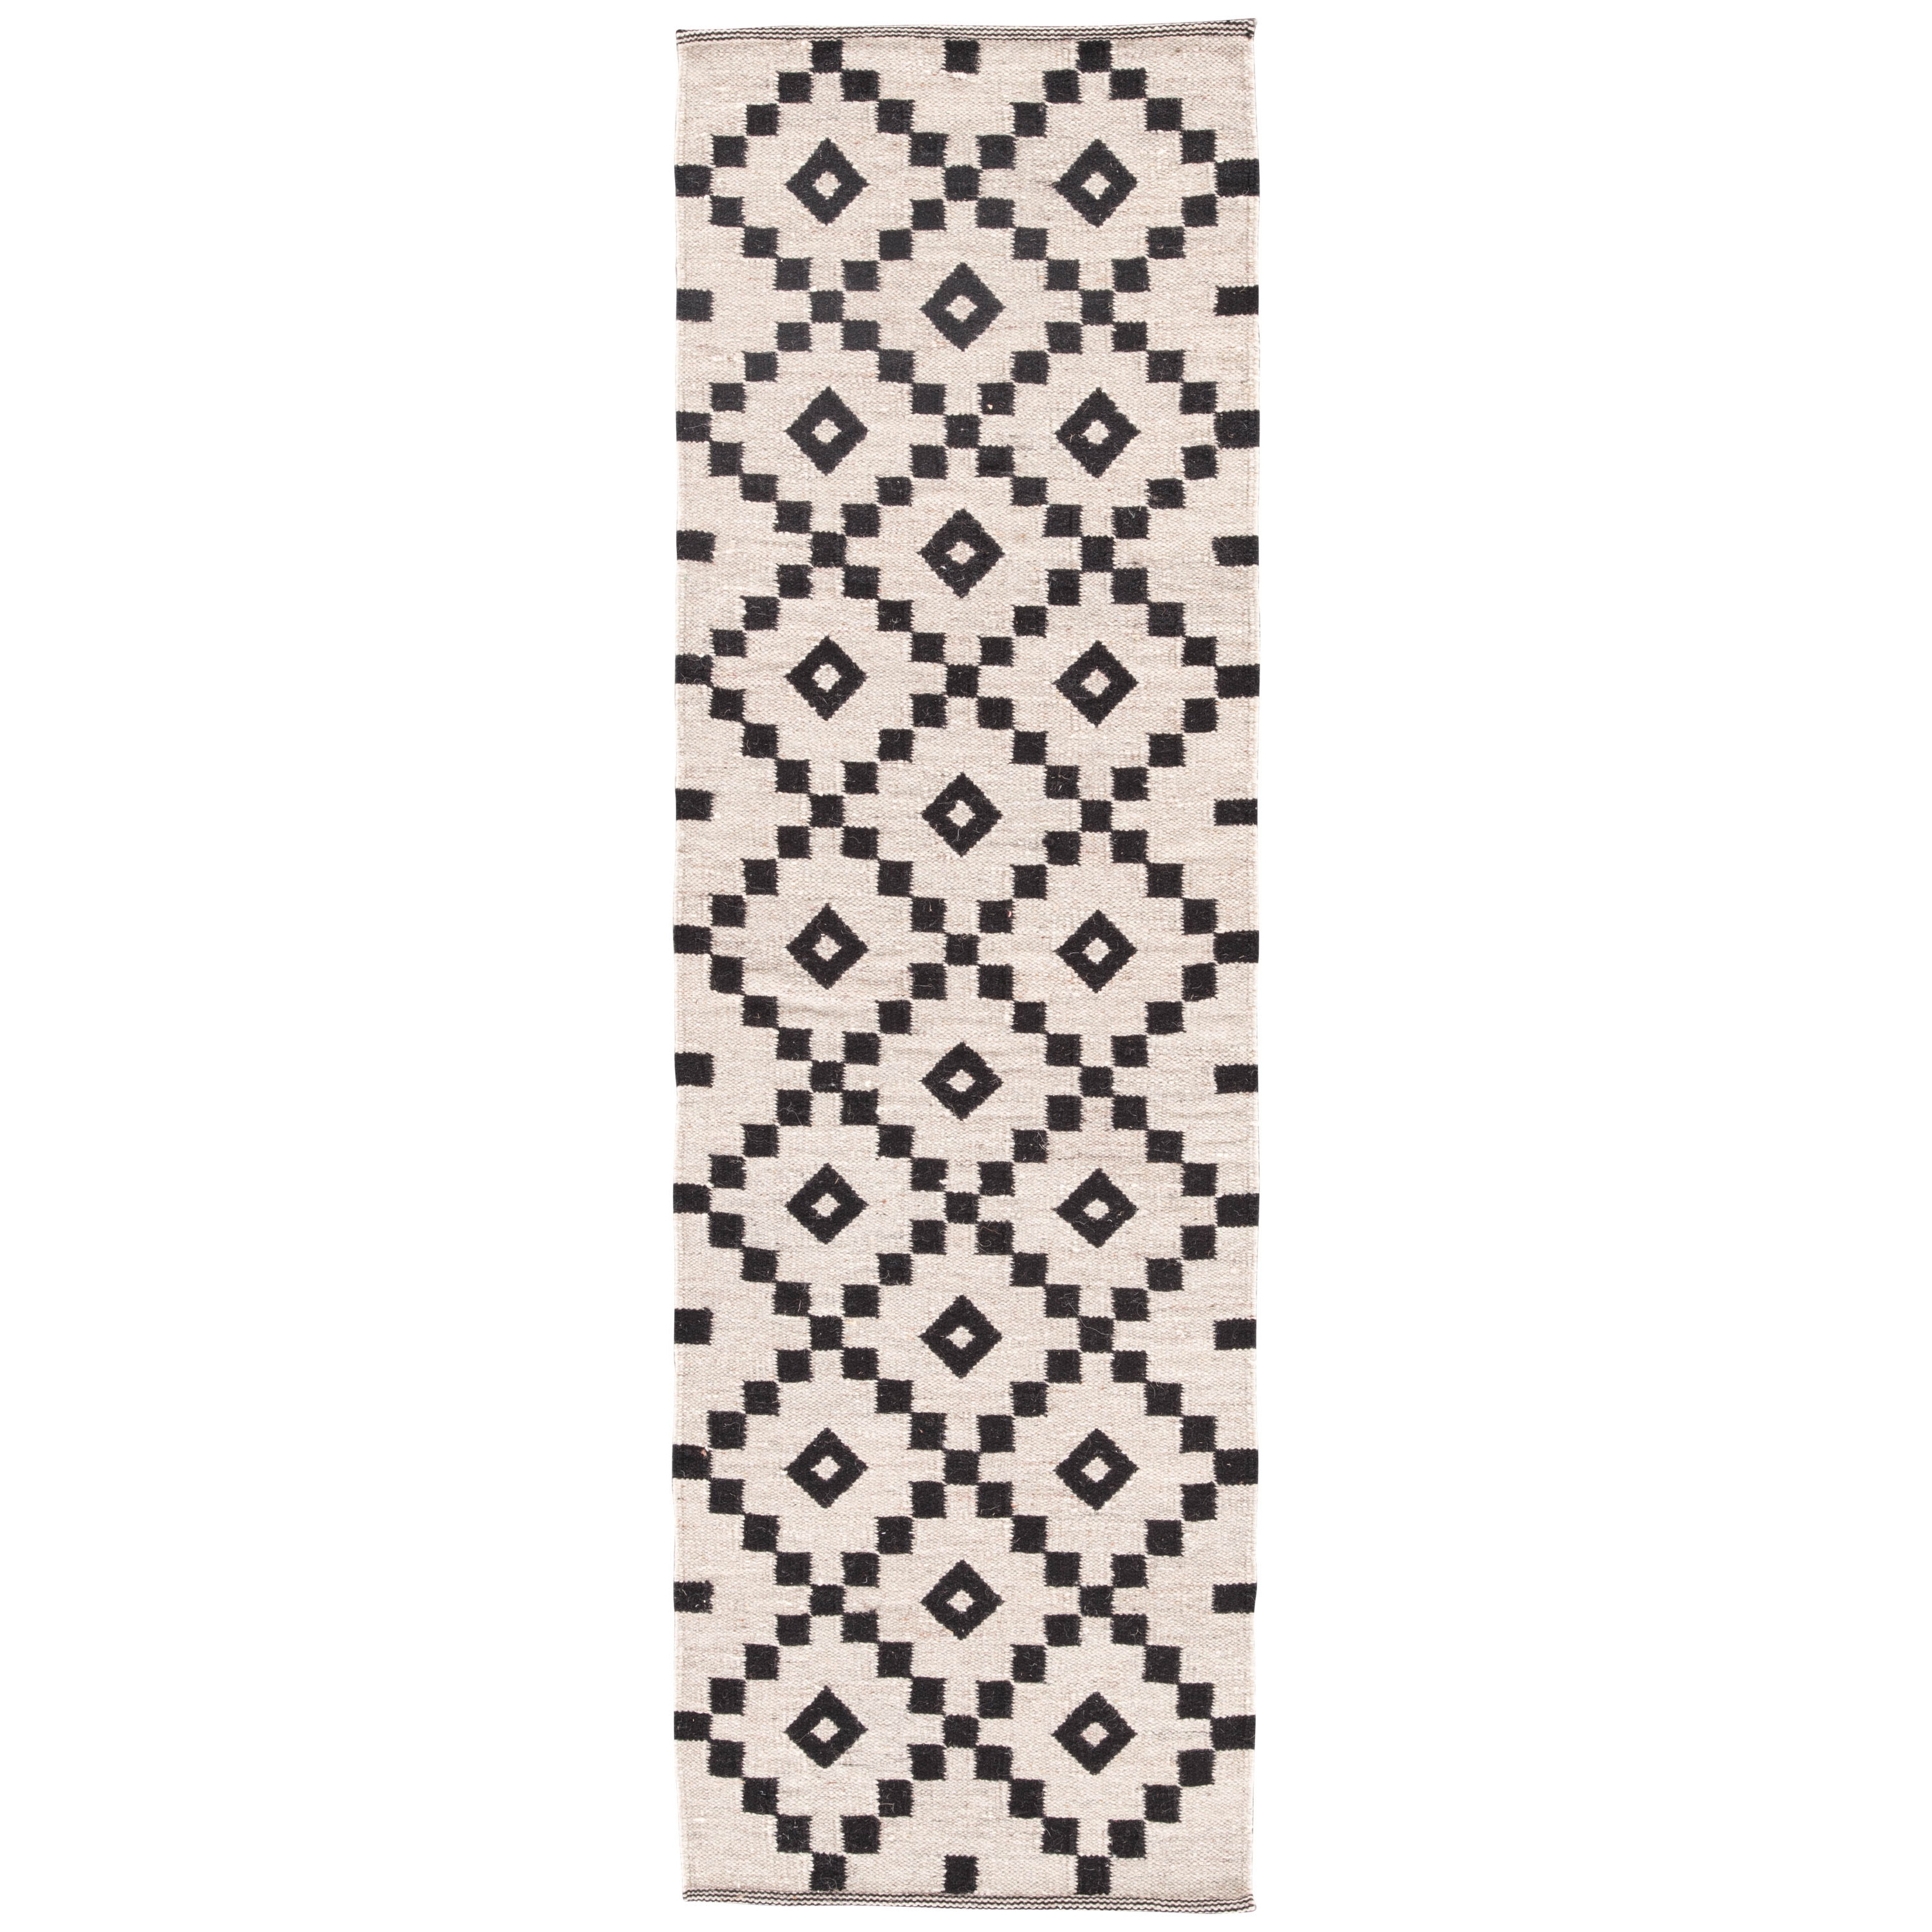 Croix Handmade Geometric Runner Rug, Black & White, 2'6" x 8' - Image 0